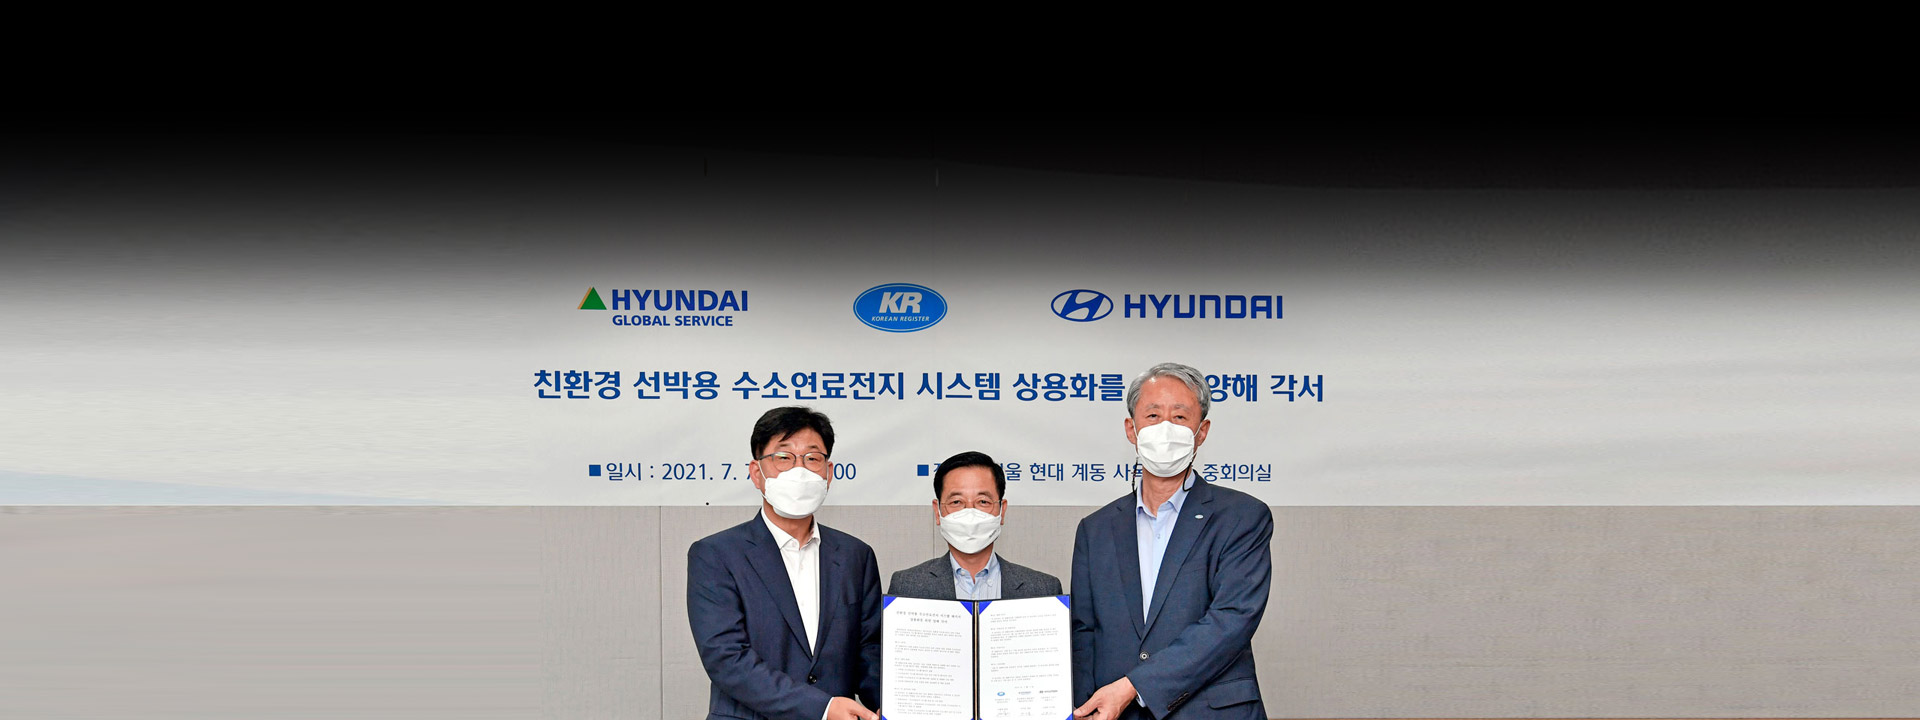 Hyundai_Fuel-cell-propulsion-systems_1920x720.jpg